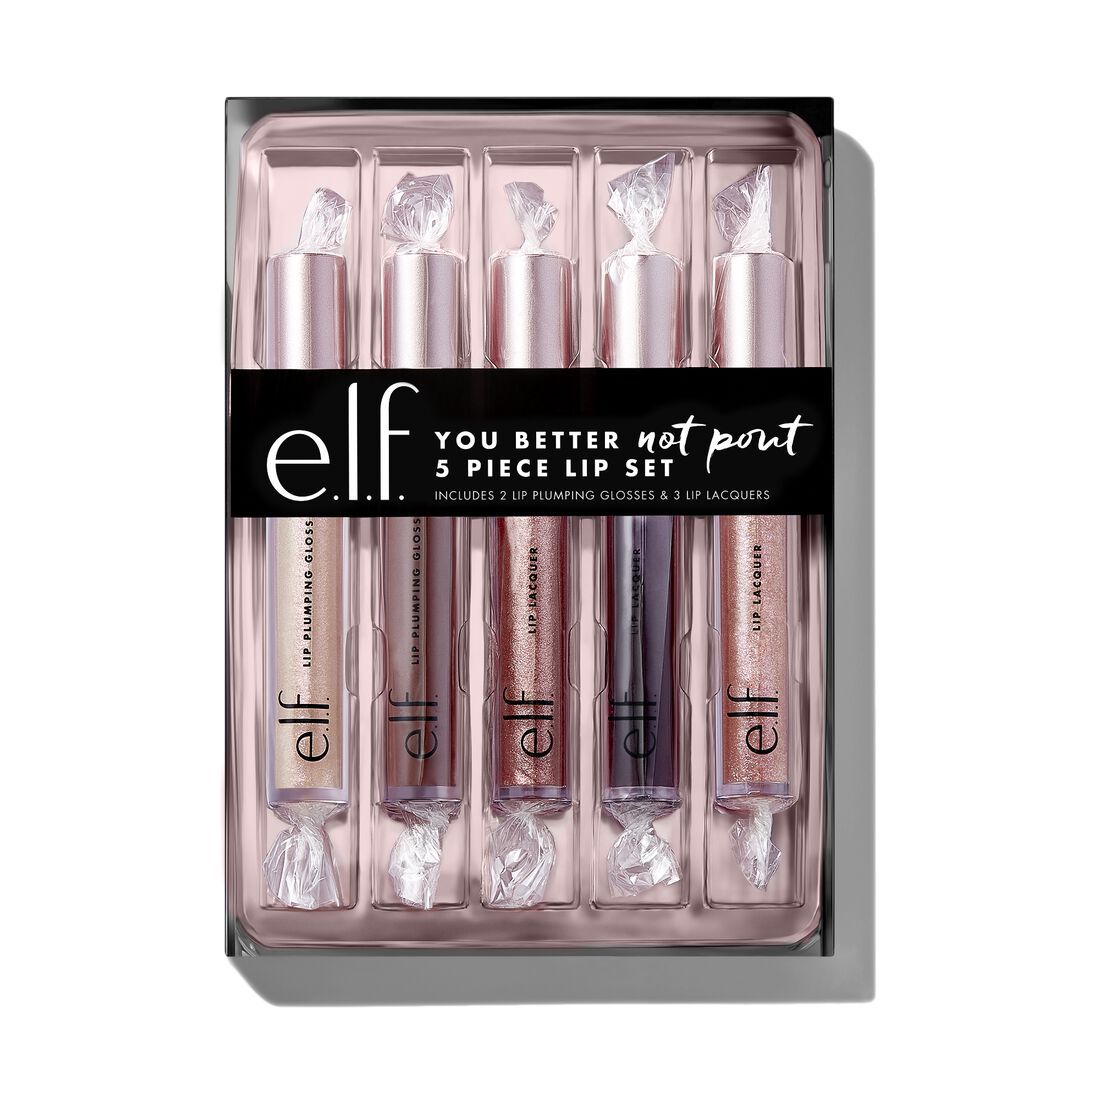 You Better Not Pout 5-Piece Lip Set | e.l.f. cosmetics (US)